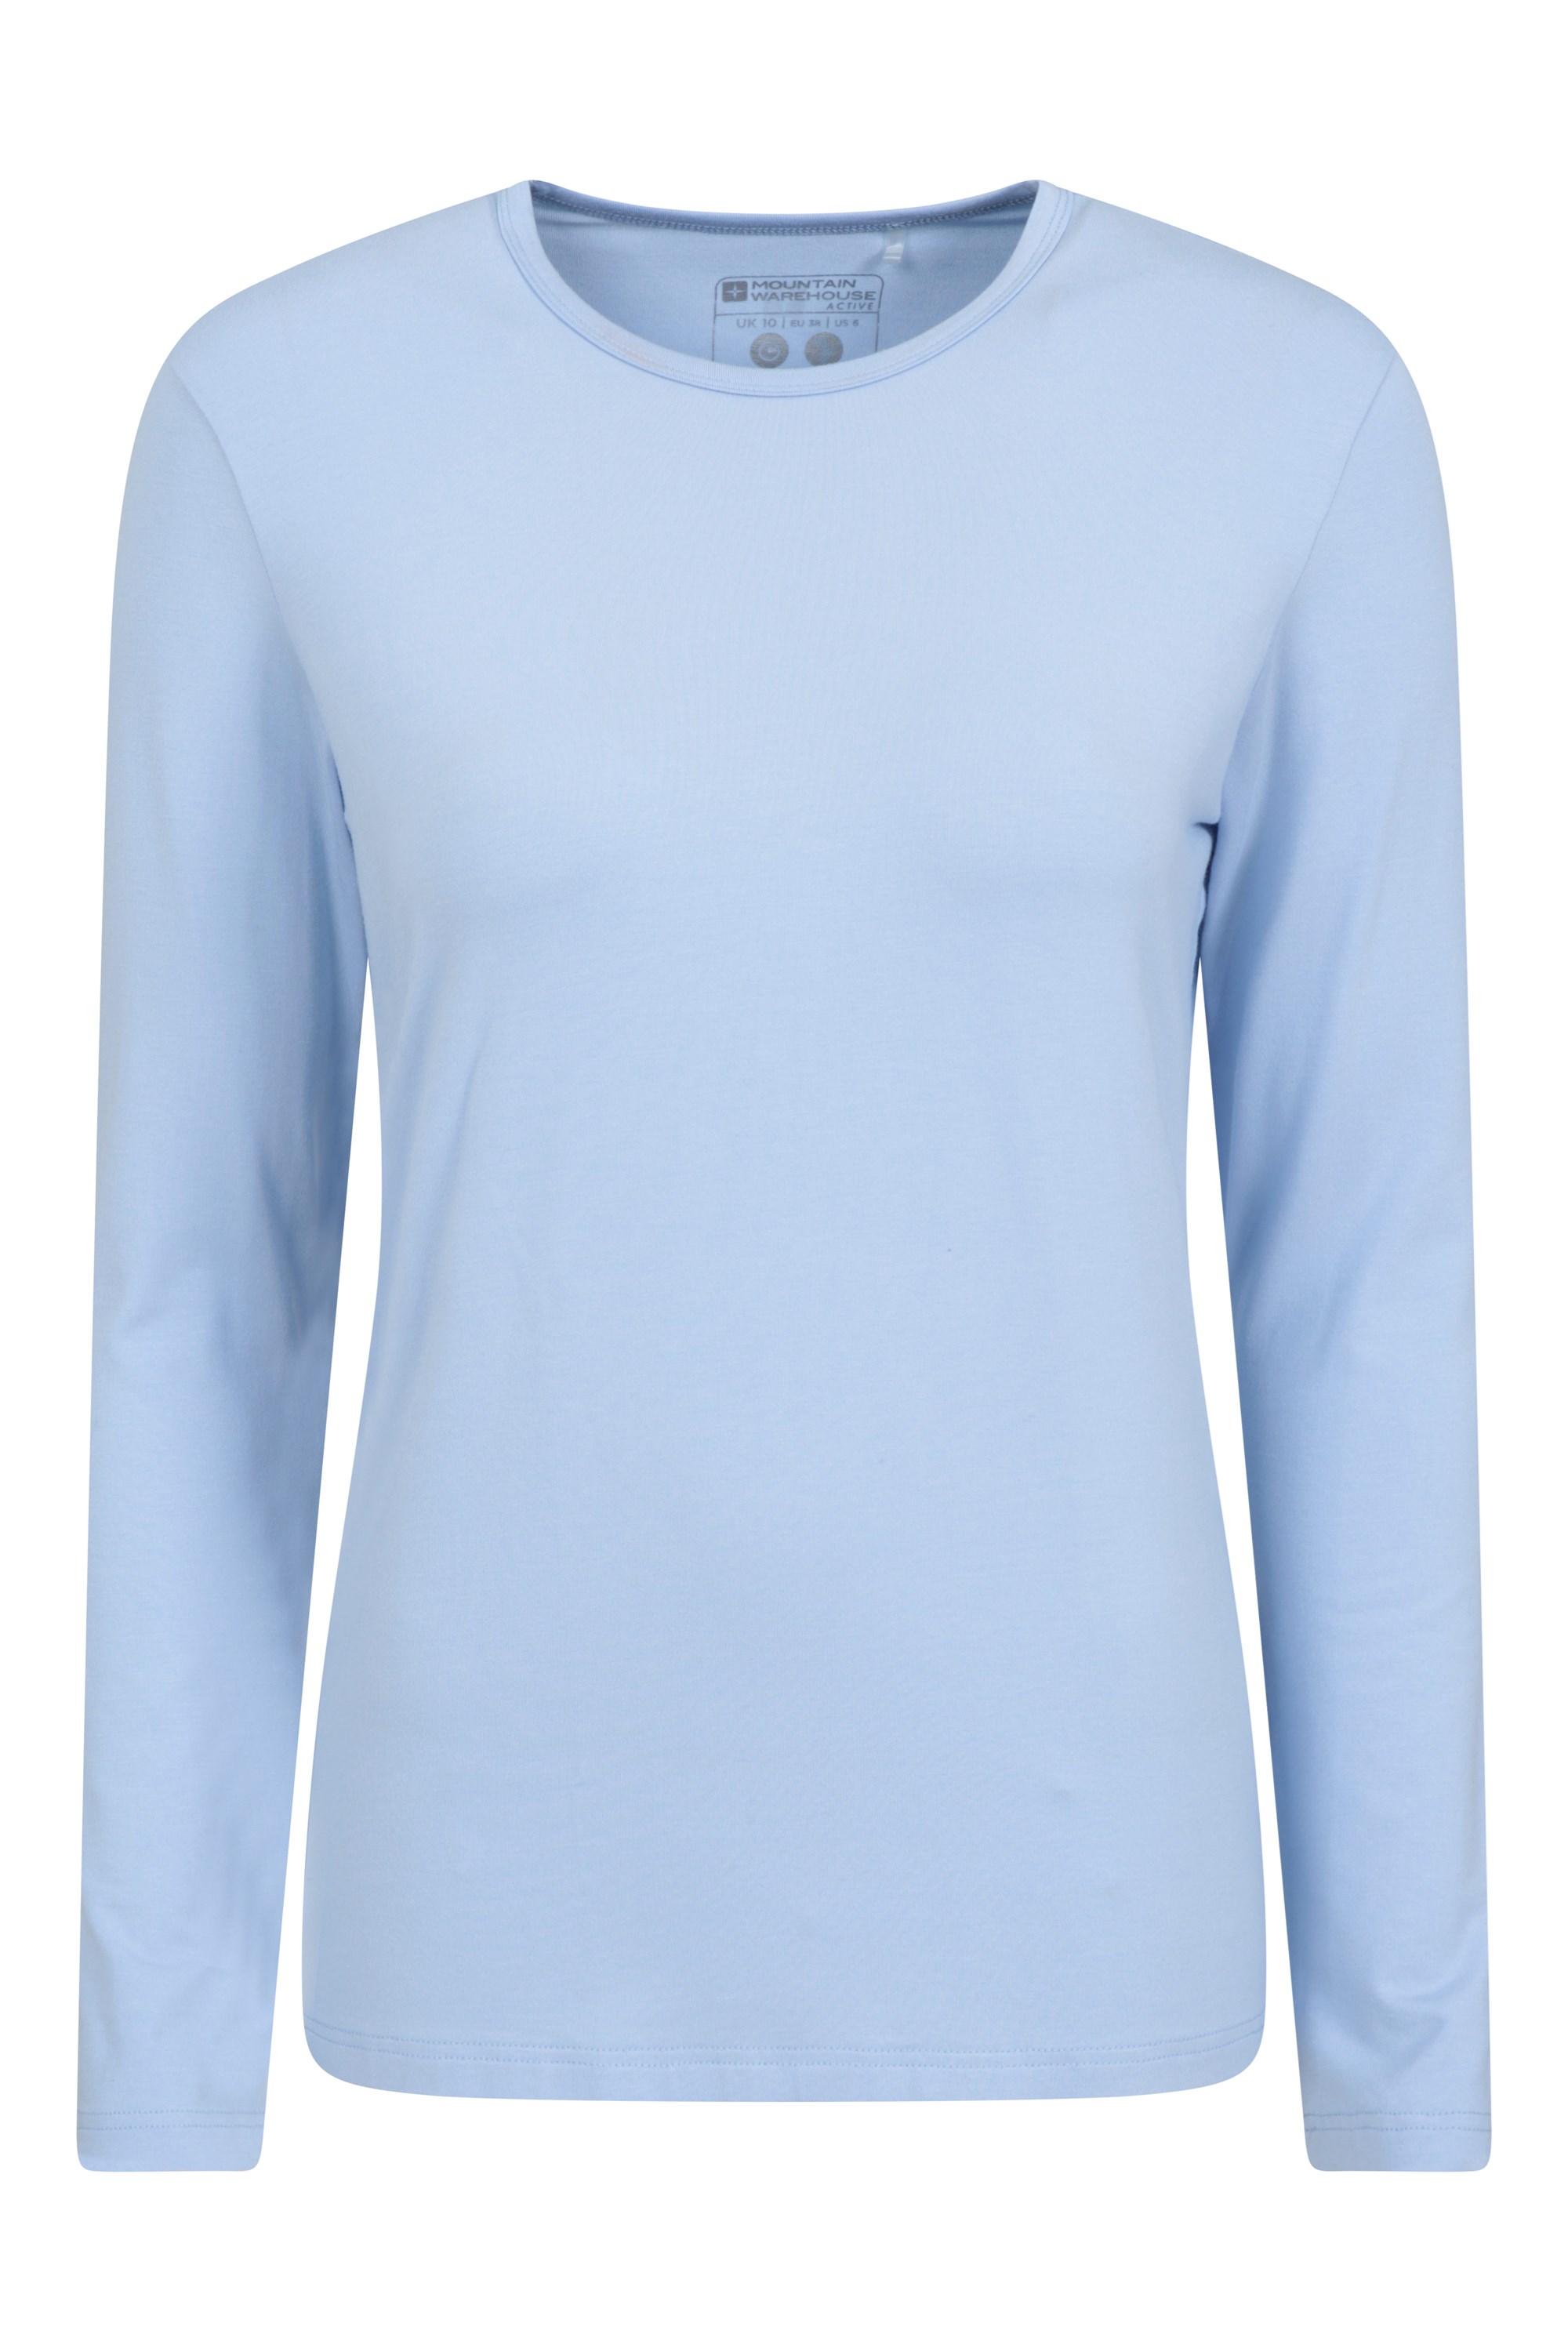 Ninedaily Women's Long Sleeve Workout Shirt Winter Fitness Activewear Casual Top